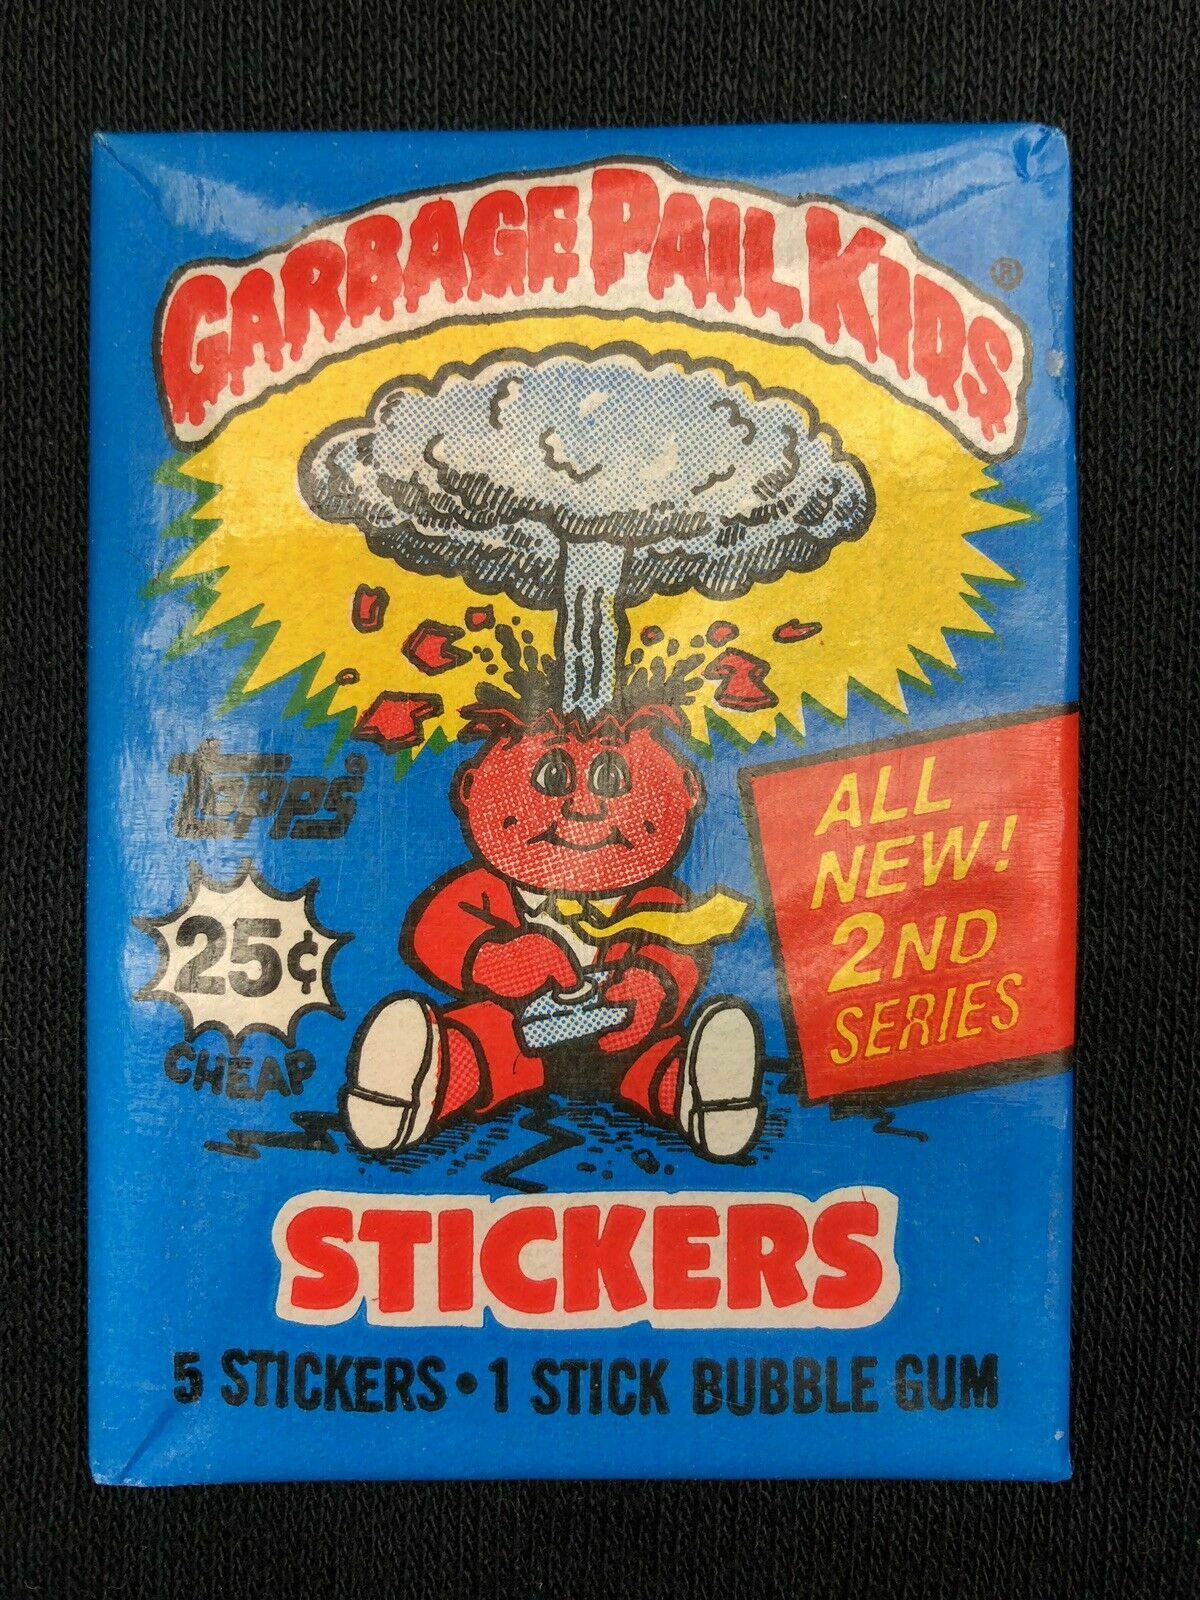 1985 Original Garbage Pail Kids Series 2 US 1 UNOPENED PACK